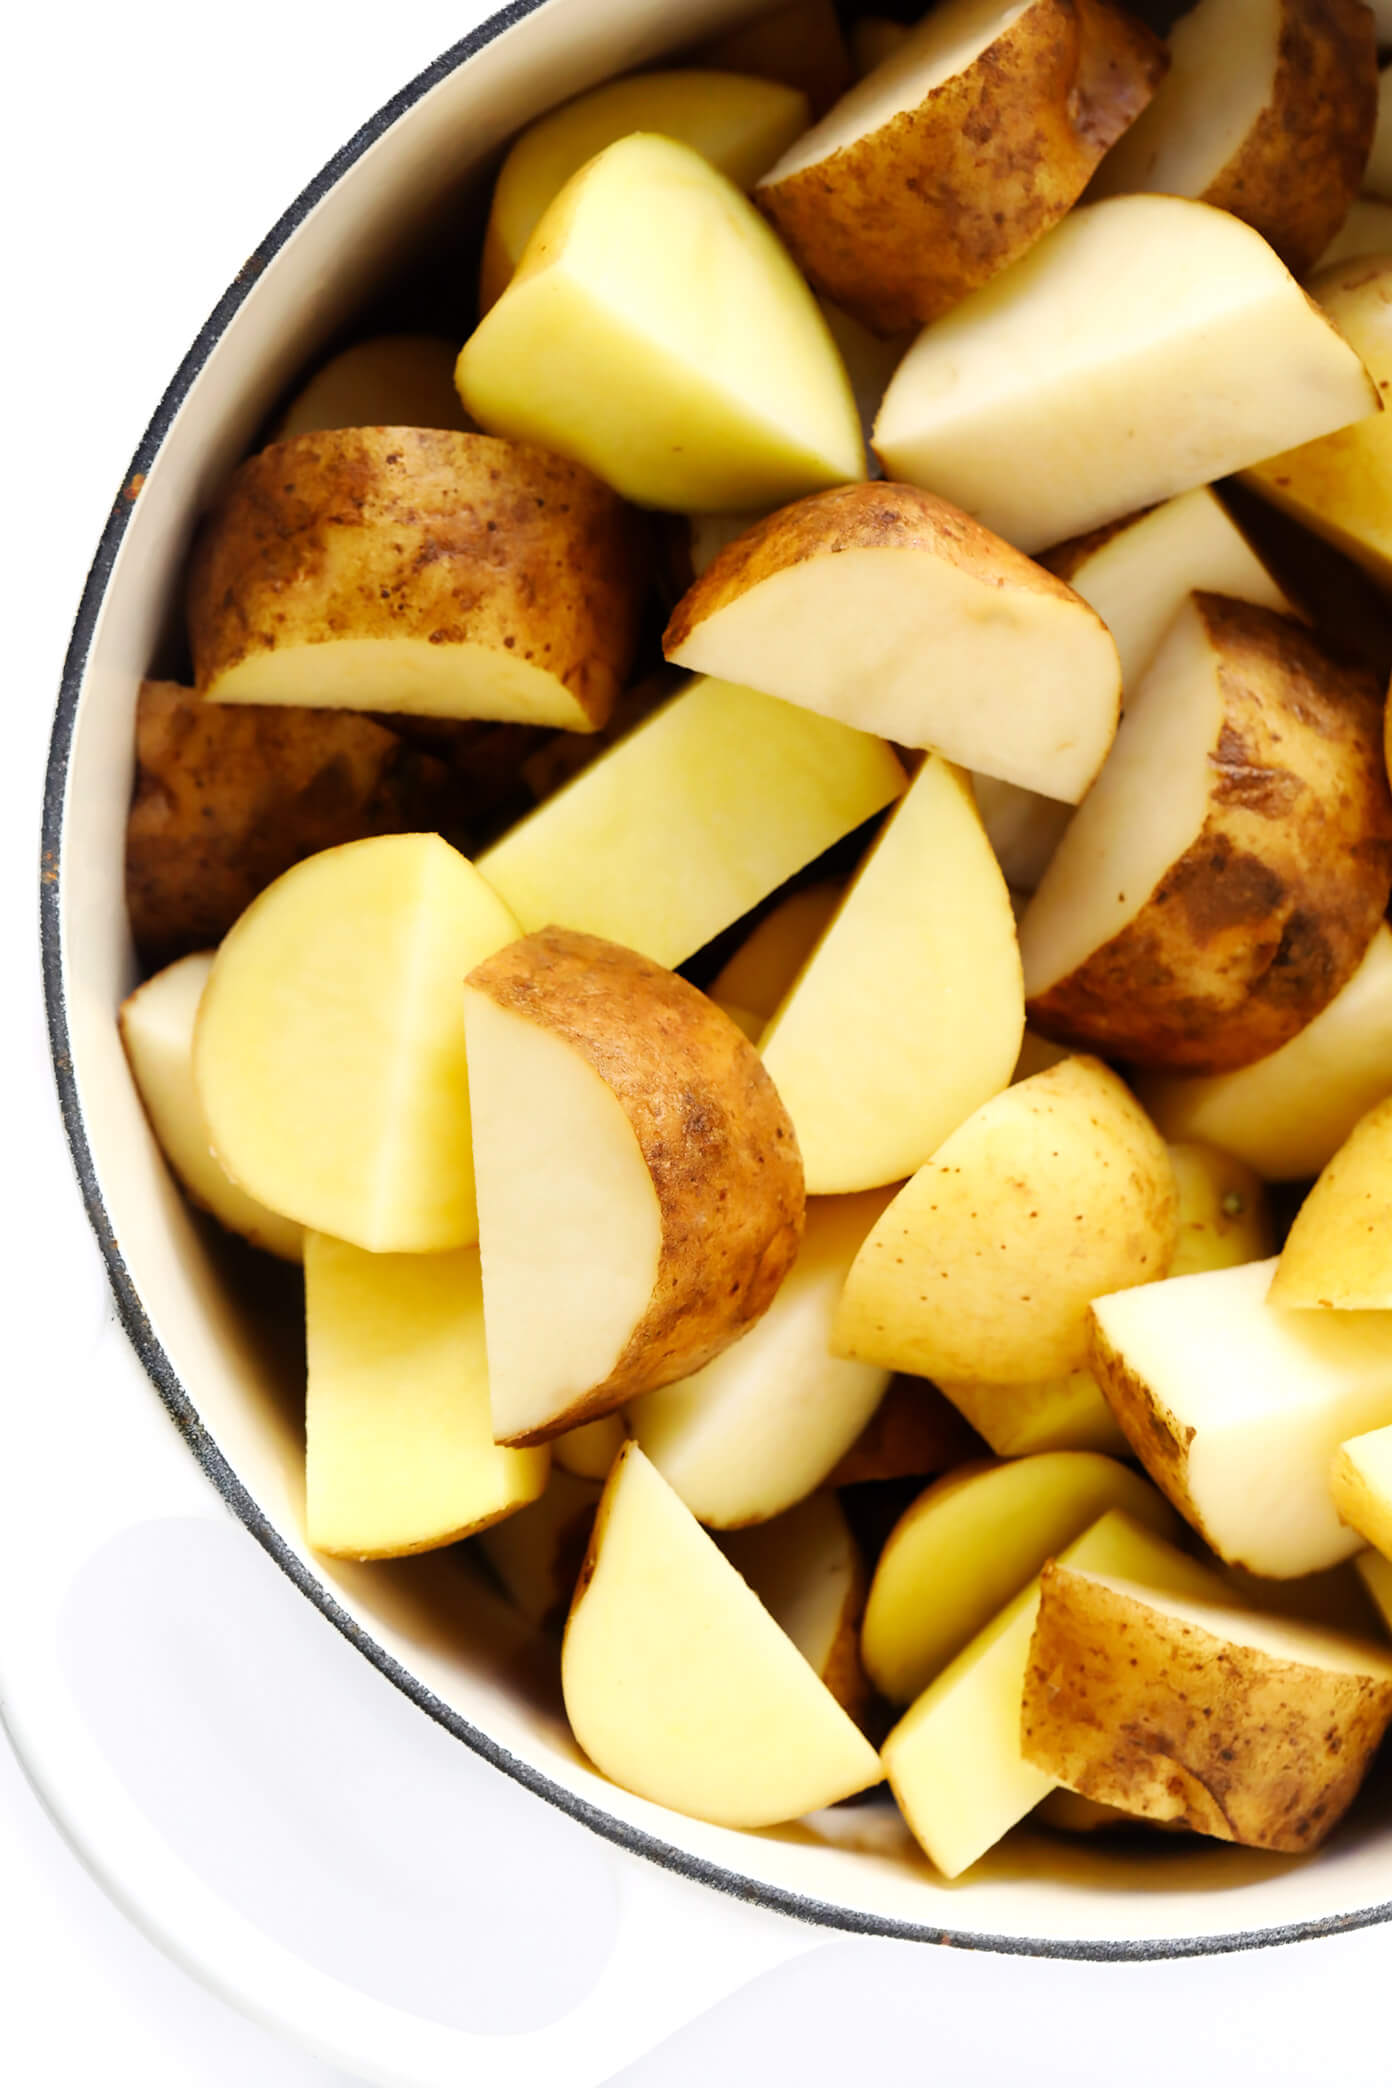 Yukon Gold Potatoes and Russet Potatoes |土豆泥食谱